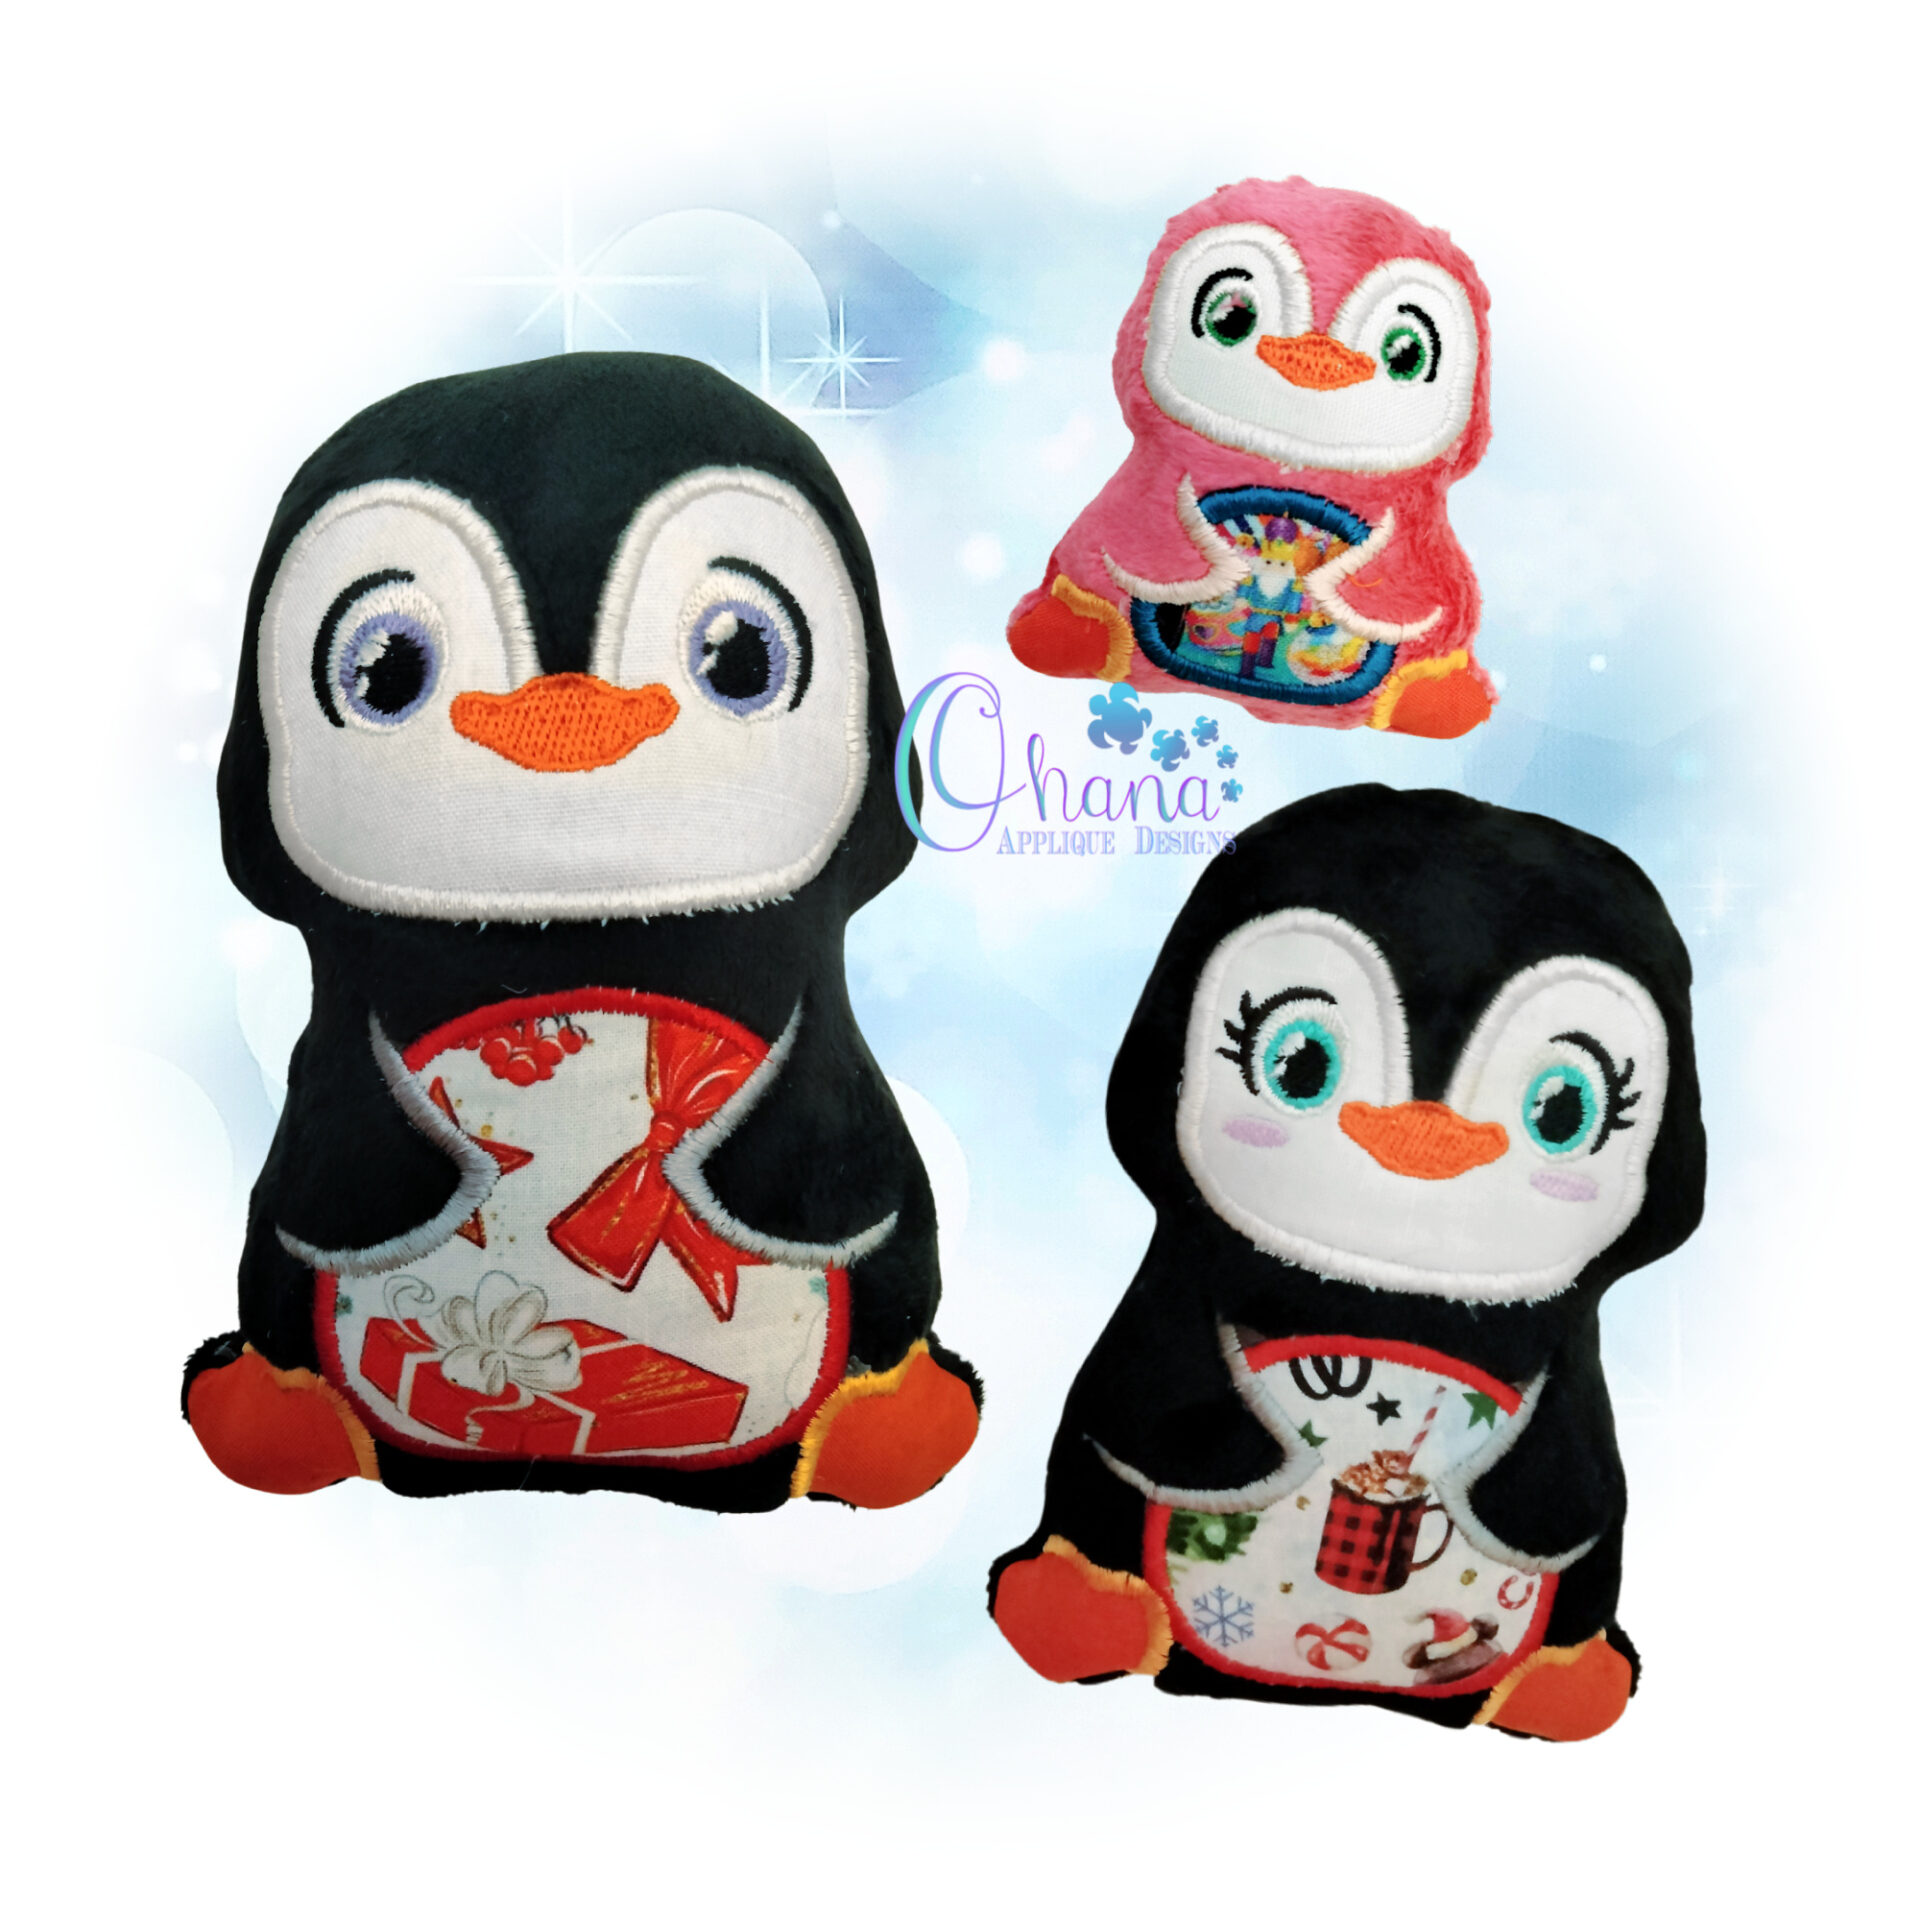 OAD Chubby Penguin Stuffie 2000 copy